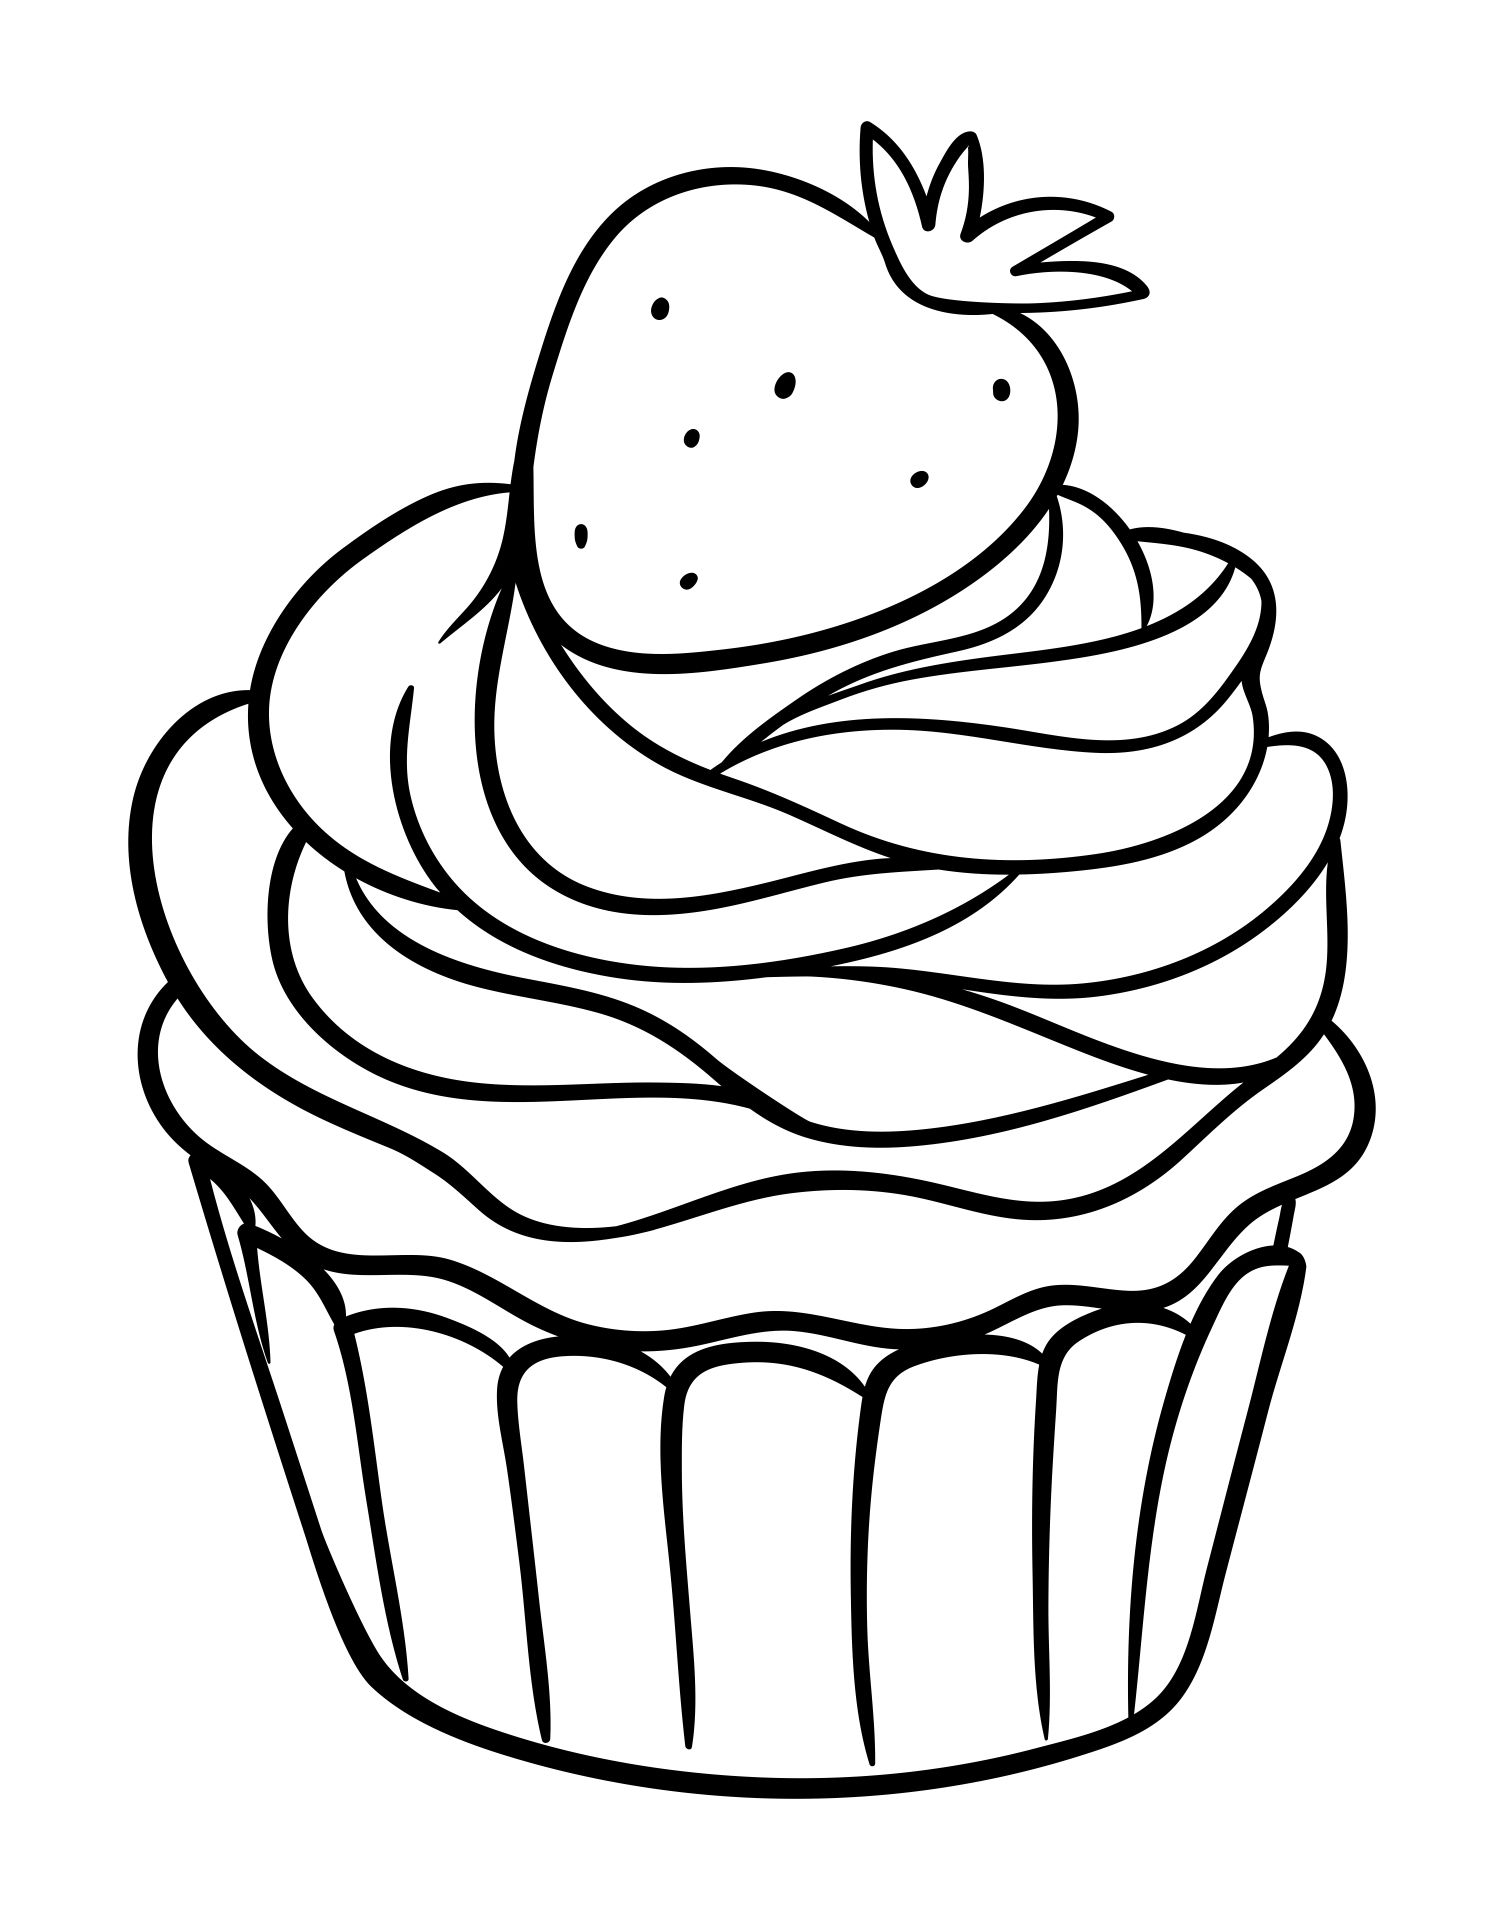 Printable Coloring Page For Kids Cupcake